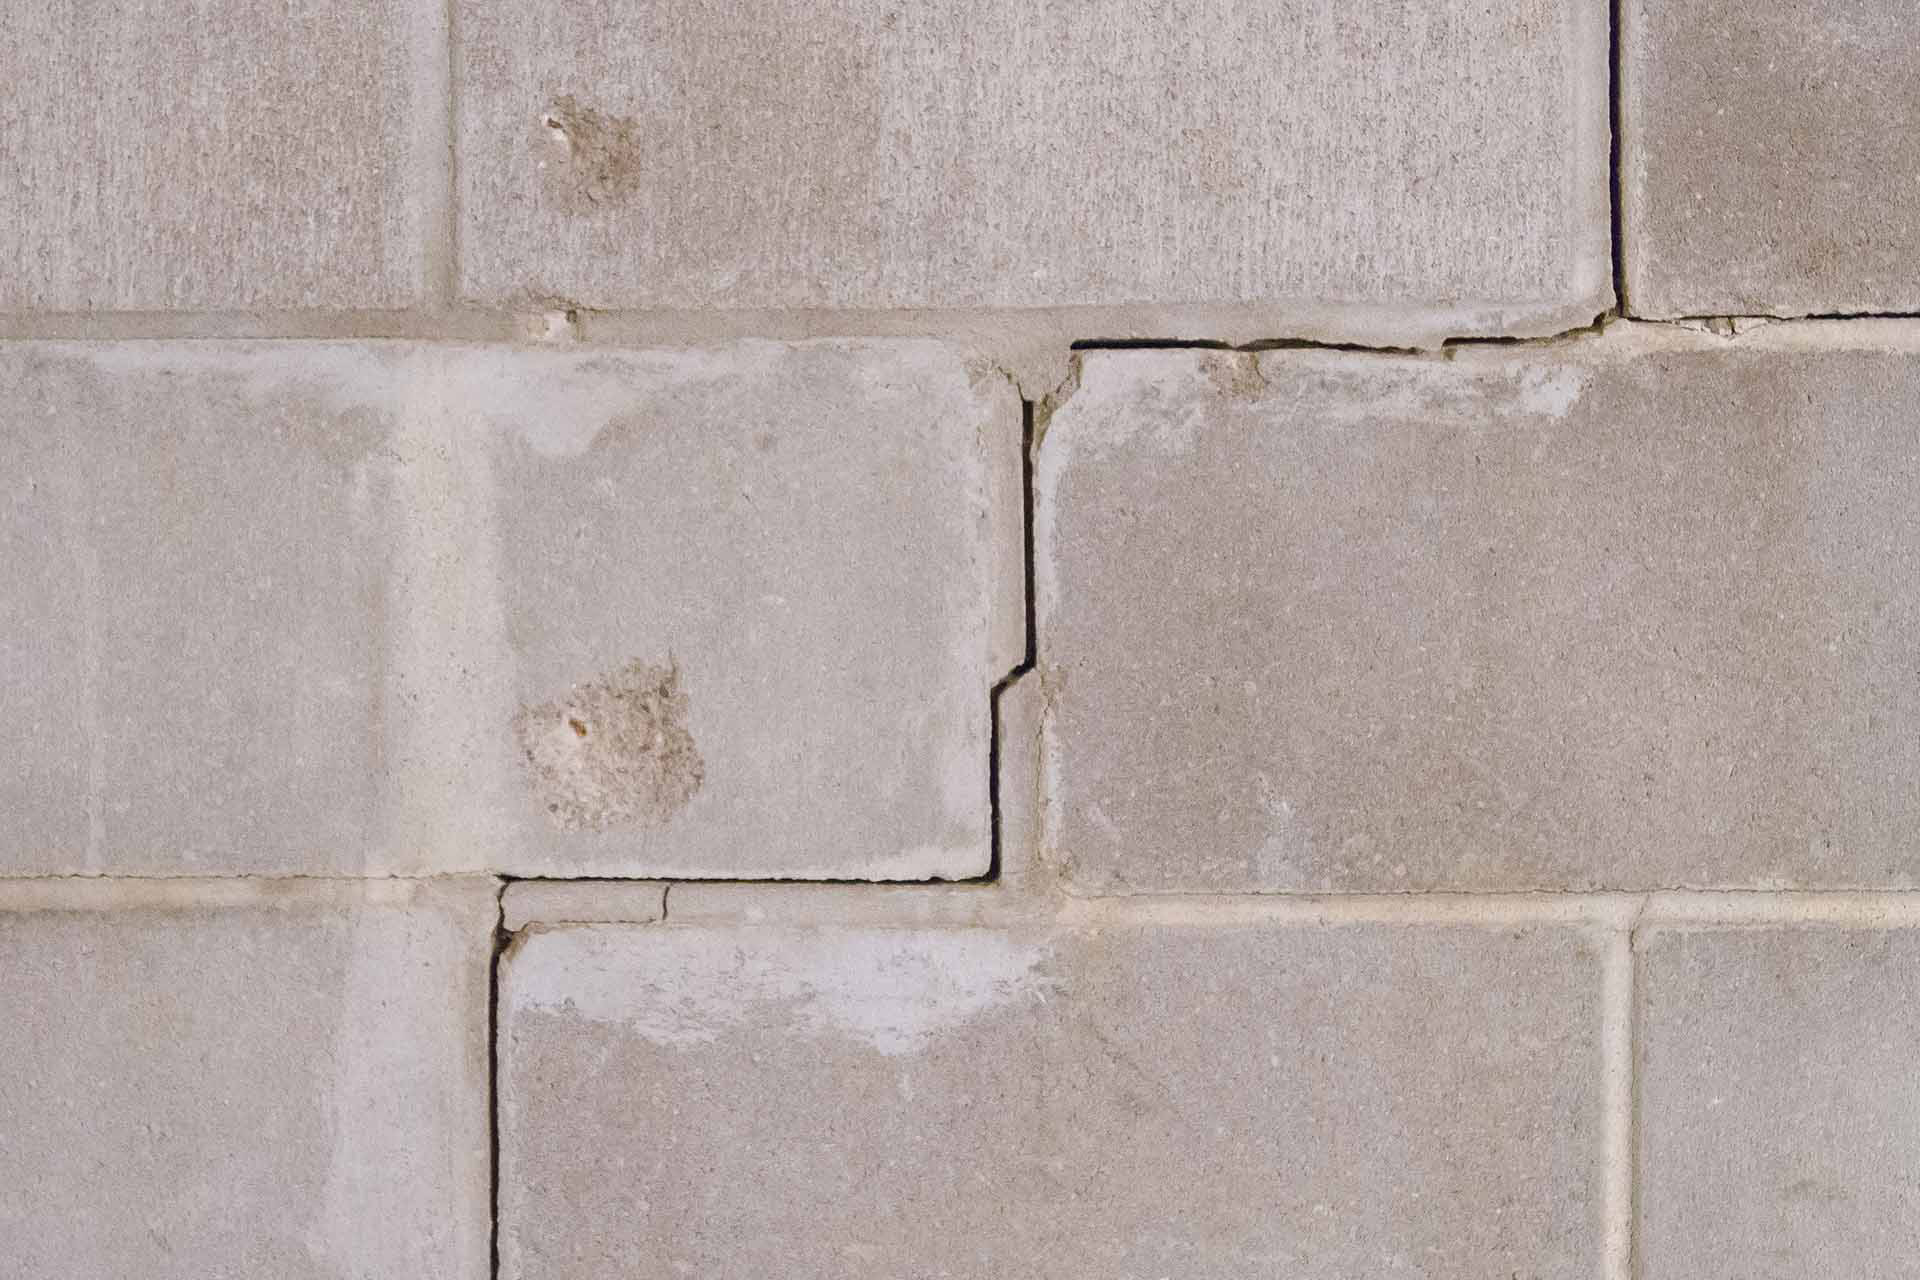 Basement wall crack